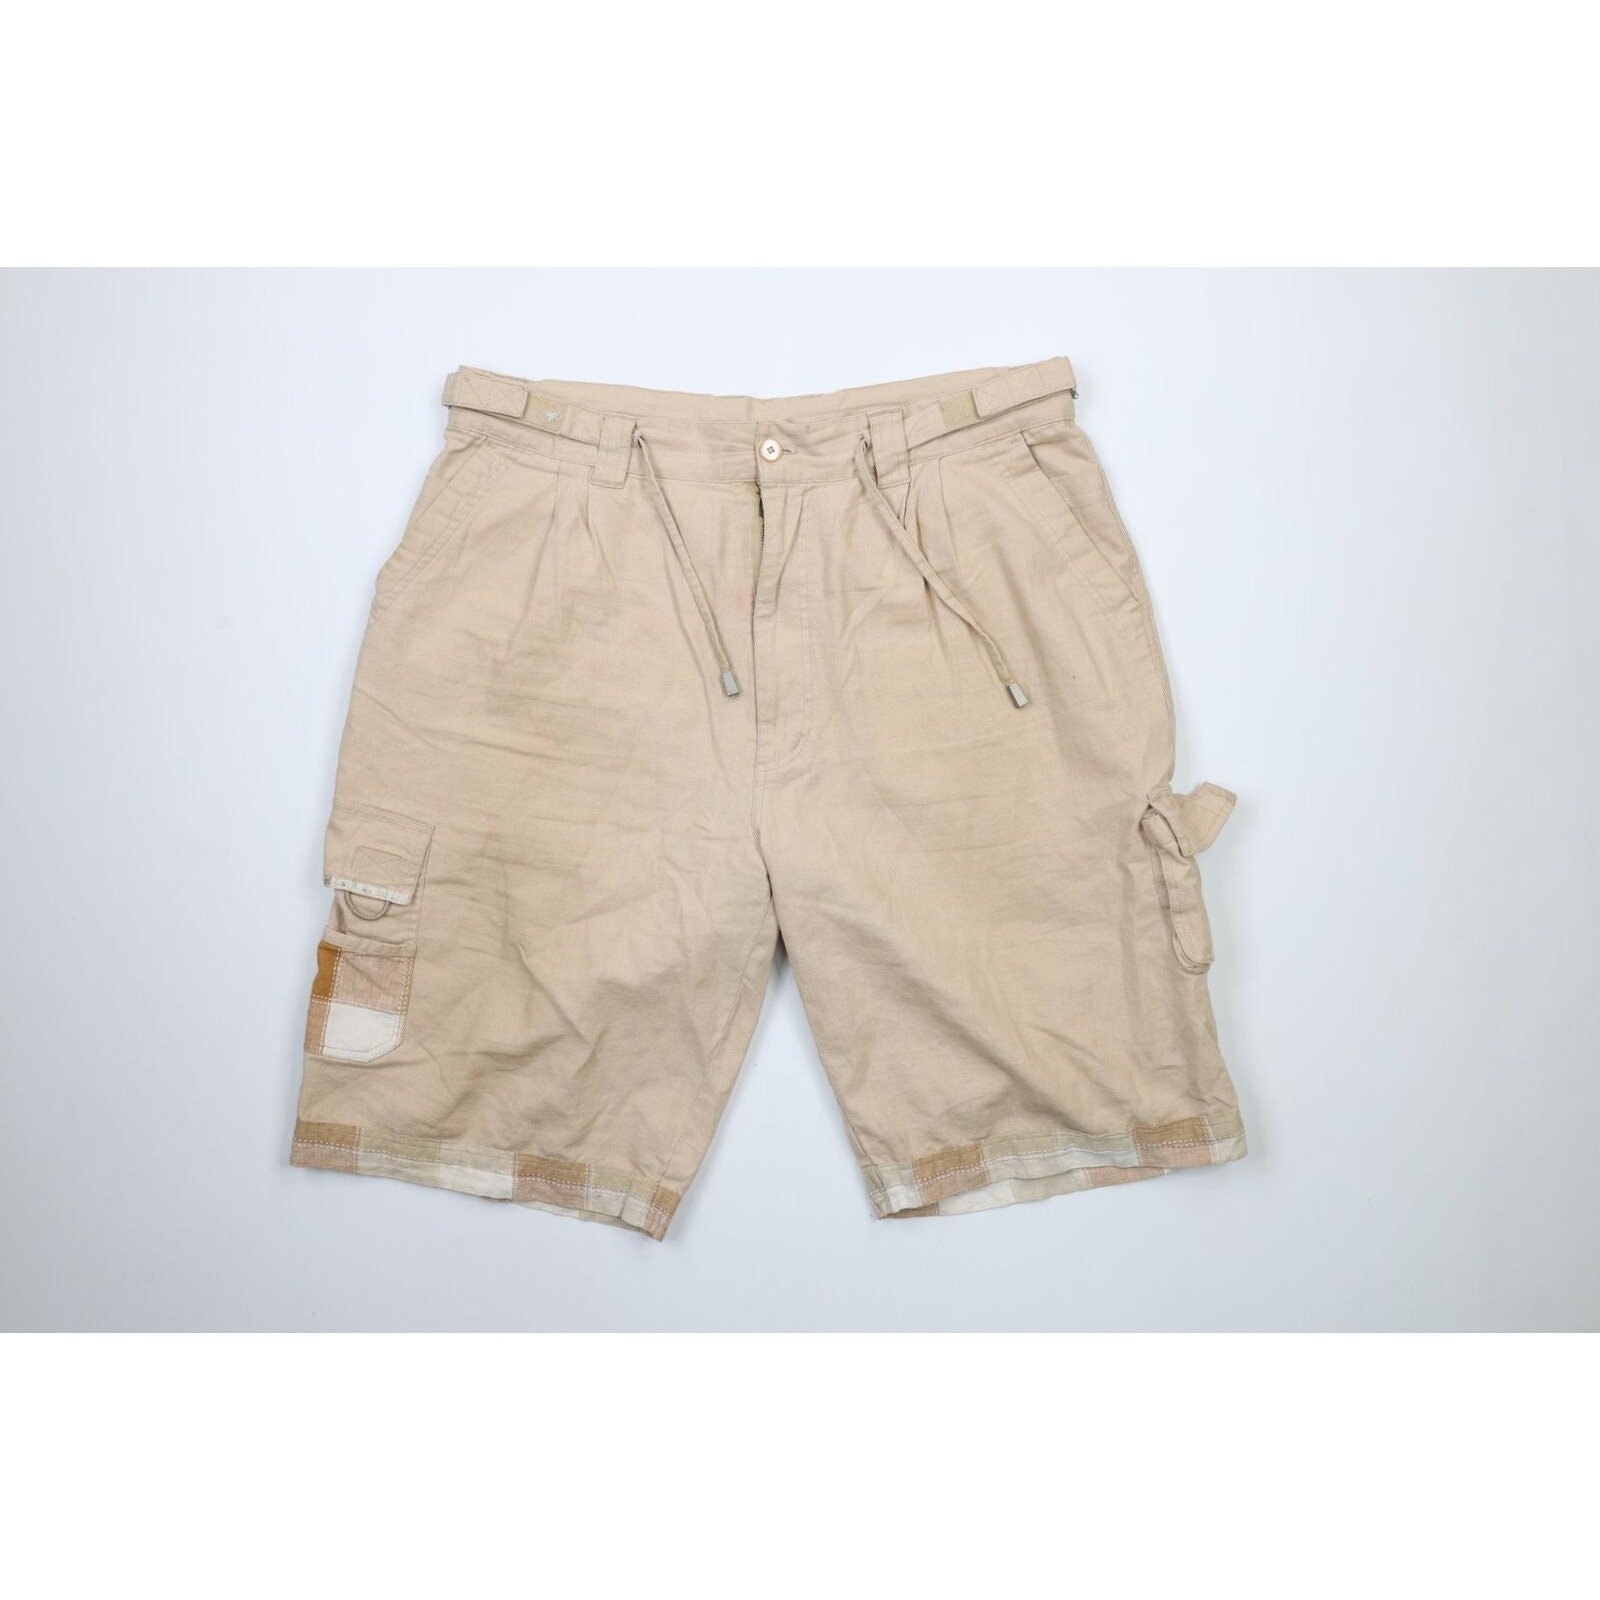 VtgHeaven 90s Vintage Pink Denim Men's Shorts Baggy Denim Bermuda Shorts Jeans 90s Hip-hop Old School Jackpot Country Clothing Rap Shorts W 32